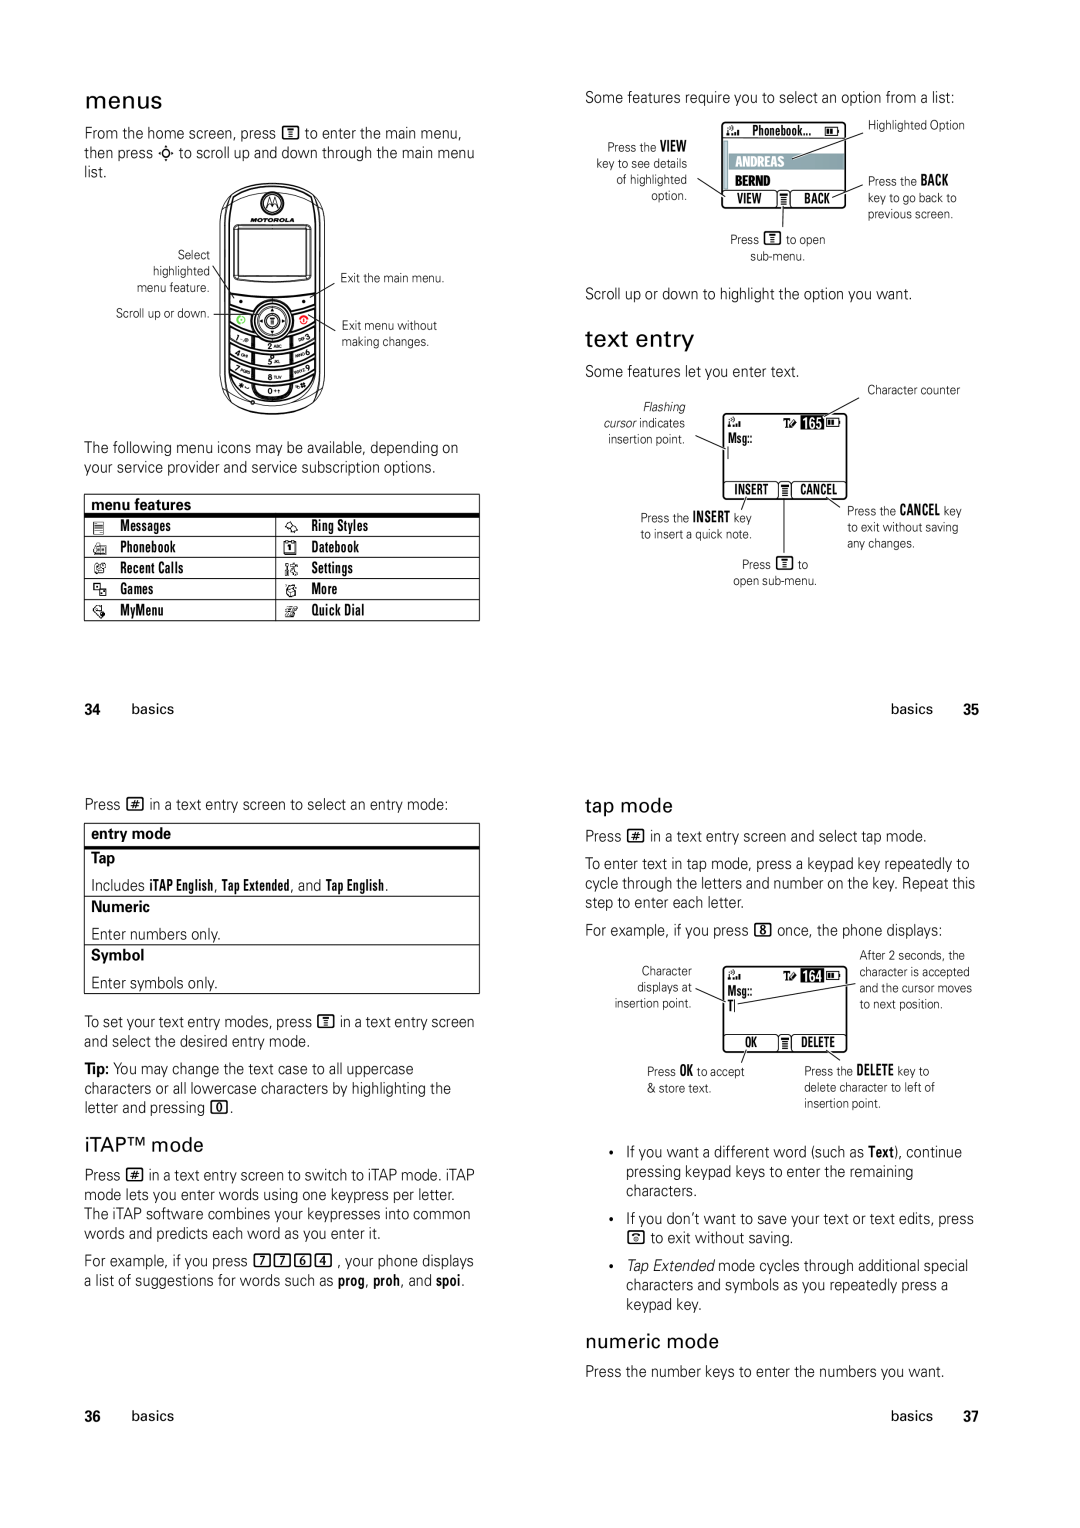 Motorola C139 manual menus, text entry, iTAP mode, tap mode, numeric mode 